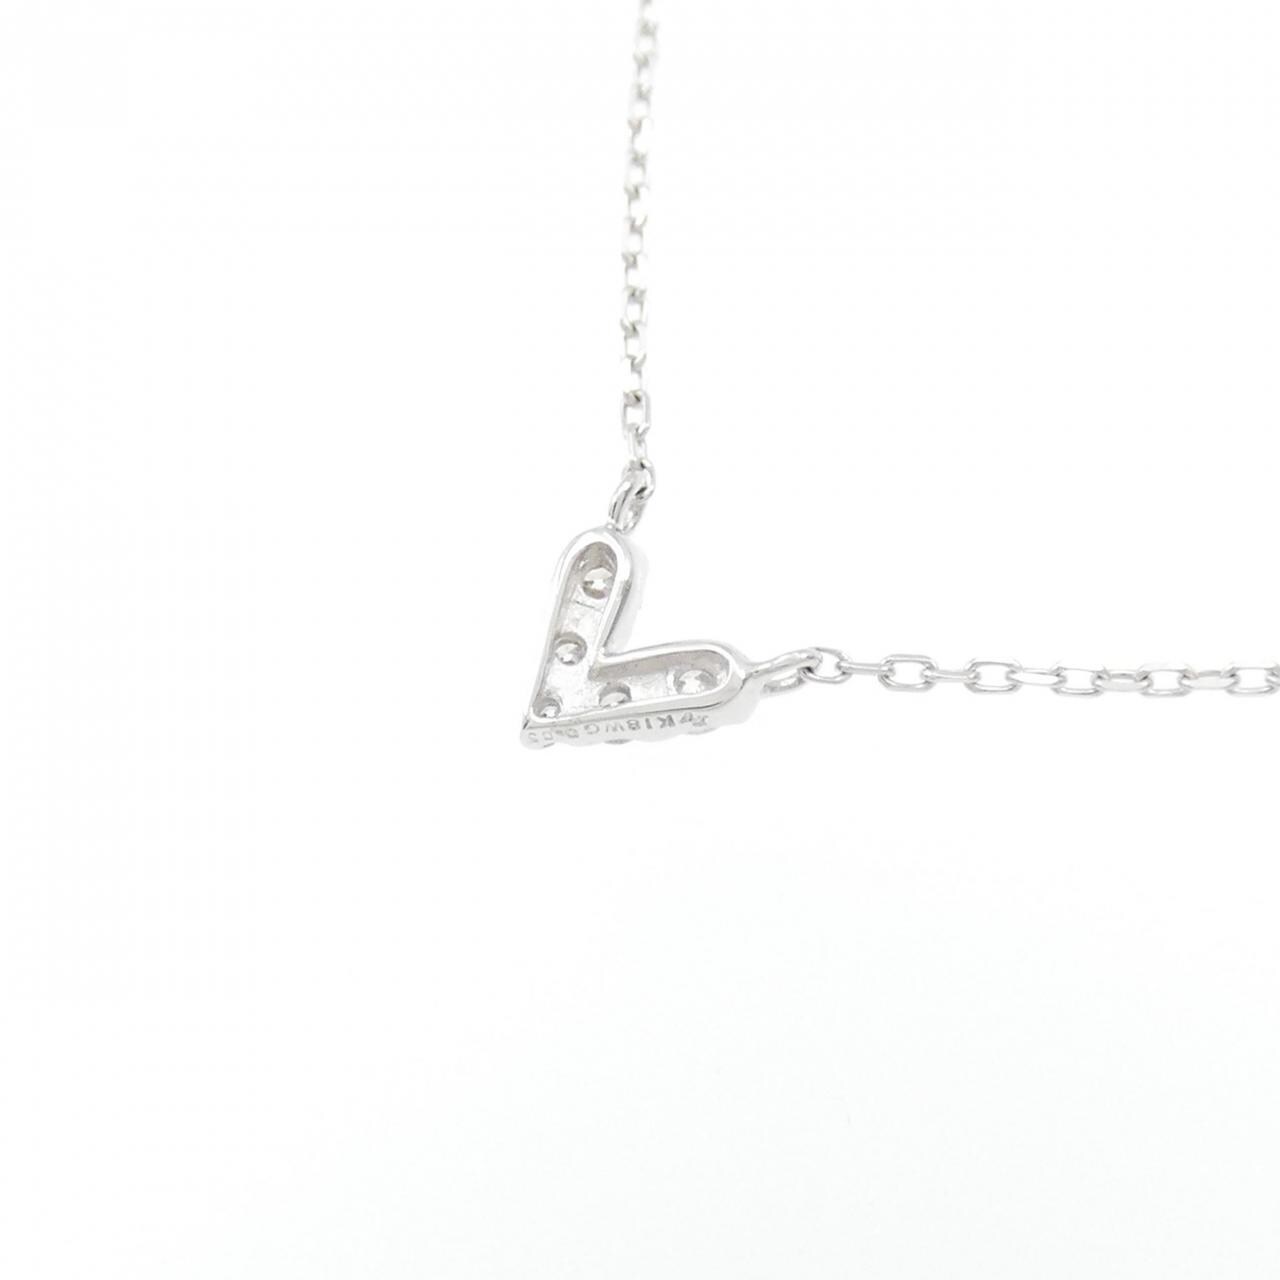 PONTE VECCHIO heart Diamond necklace 0.05CT